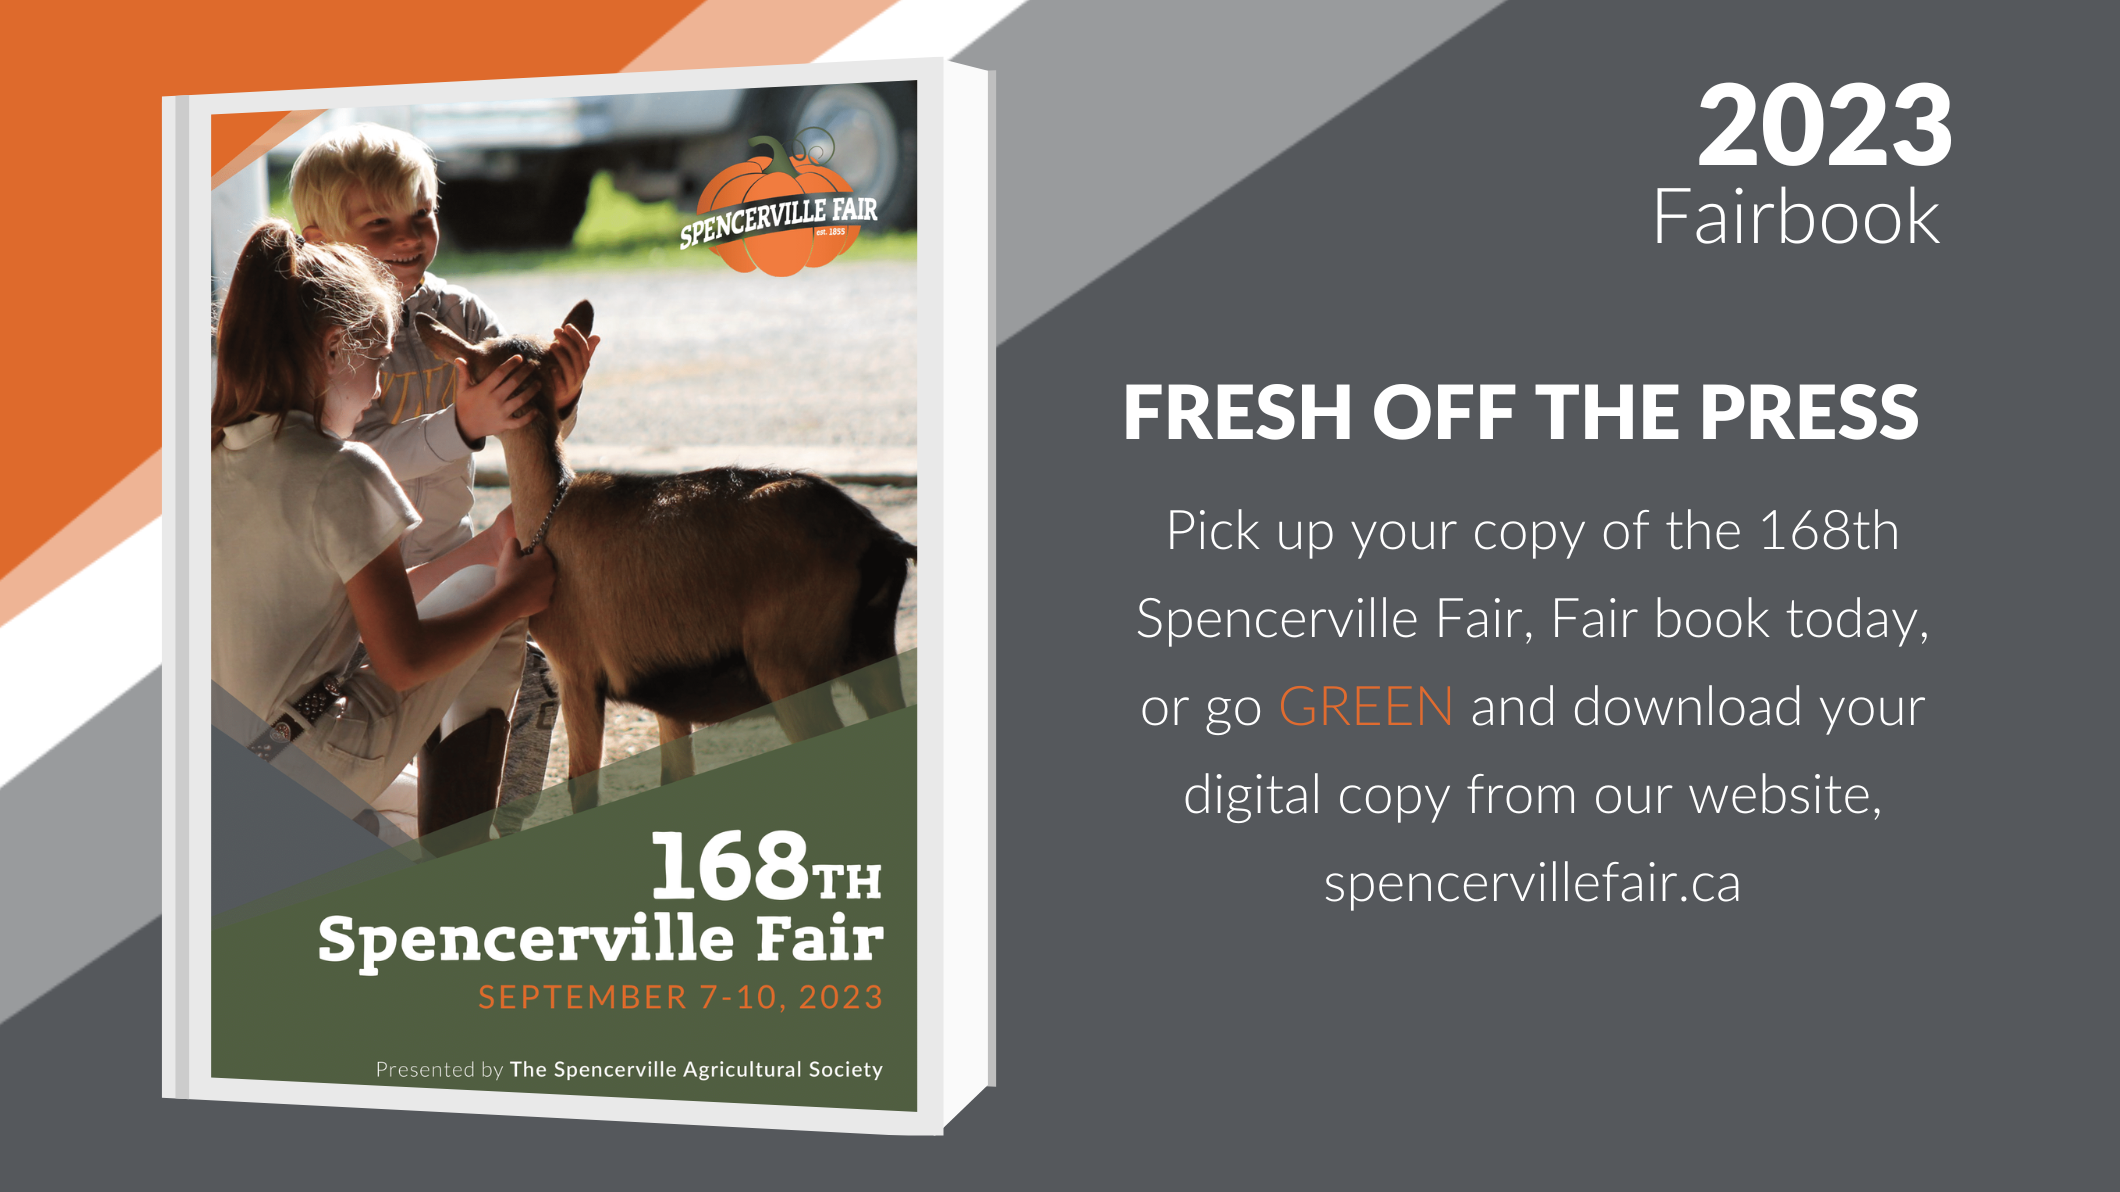 The Spencerville Fair Fairbook